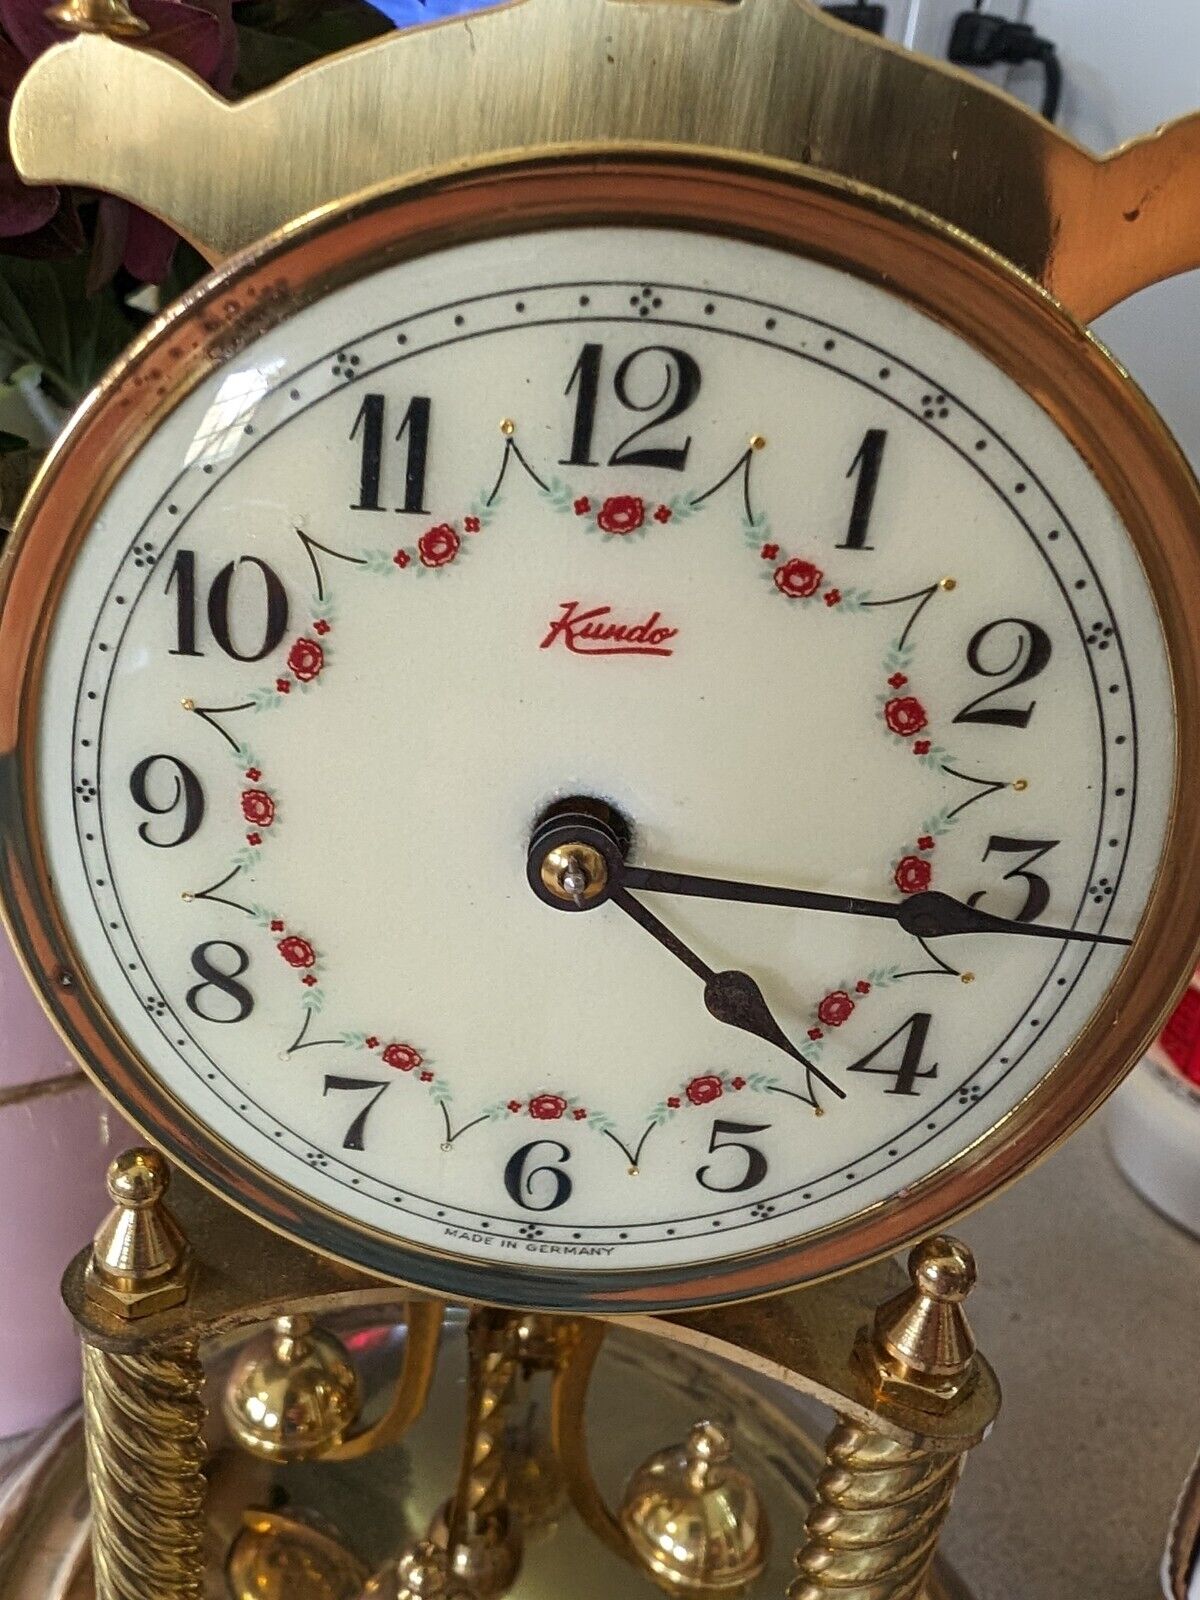 Vintage Kundo Anniversary 400 Day Clock - Needs Repair